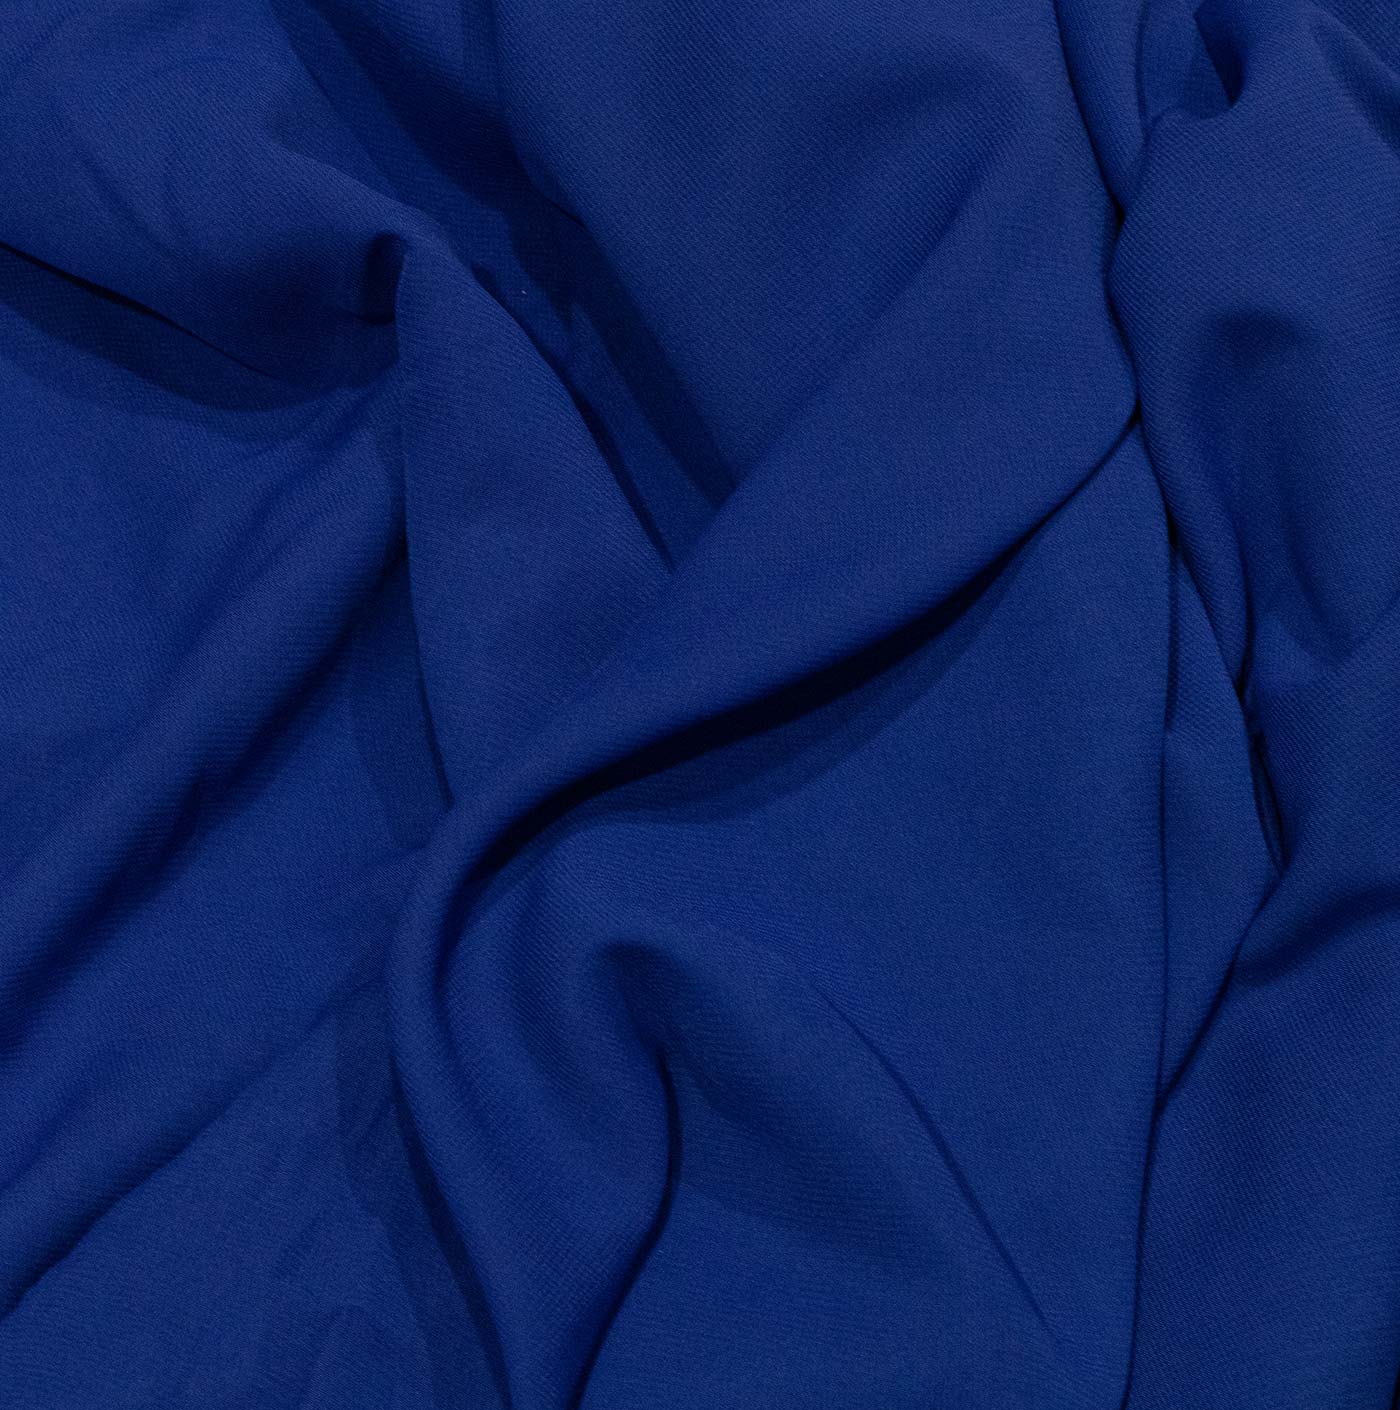 Royal Blue Silk Chiffon Fabric